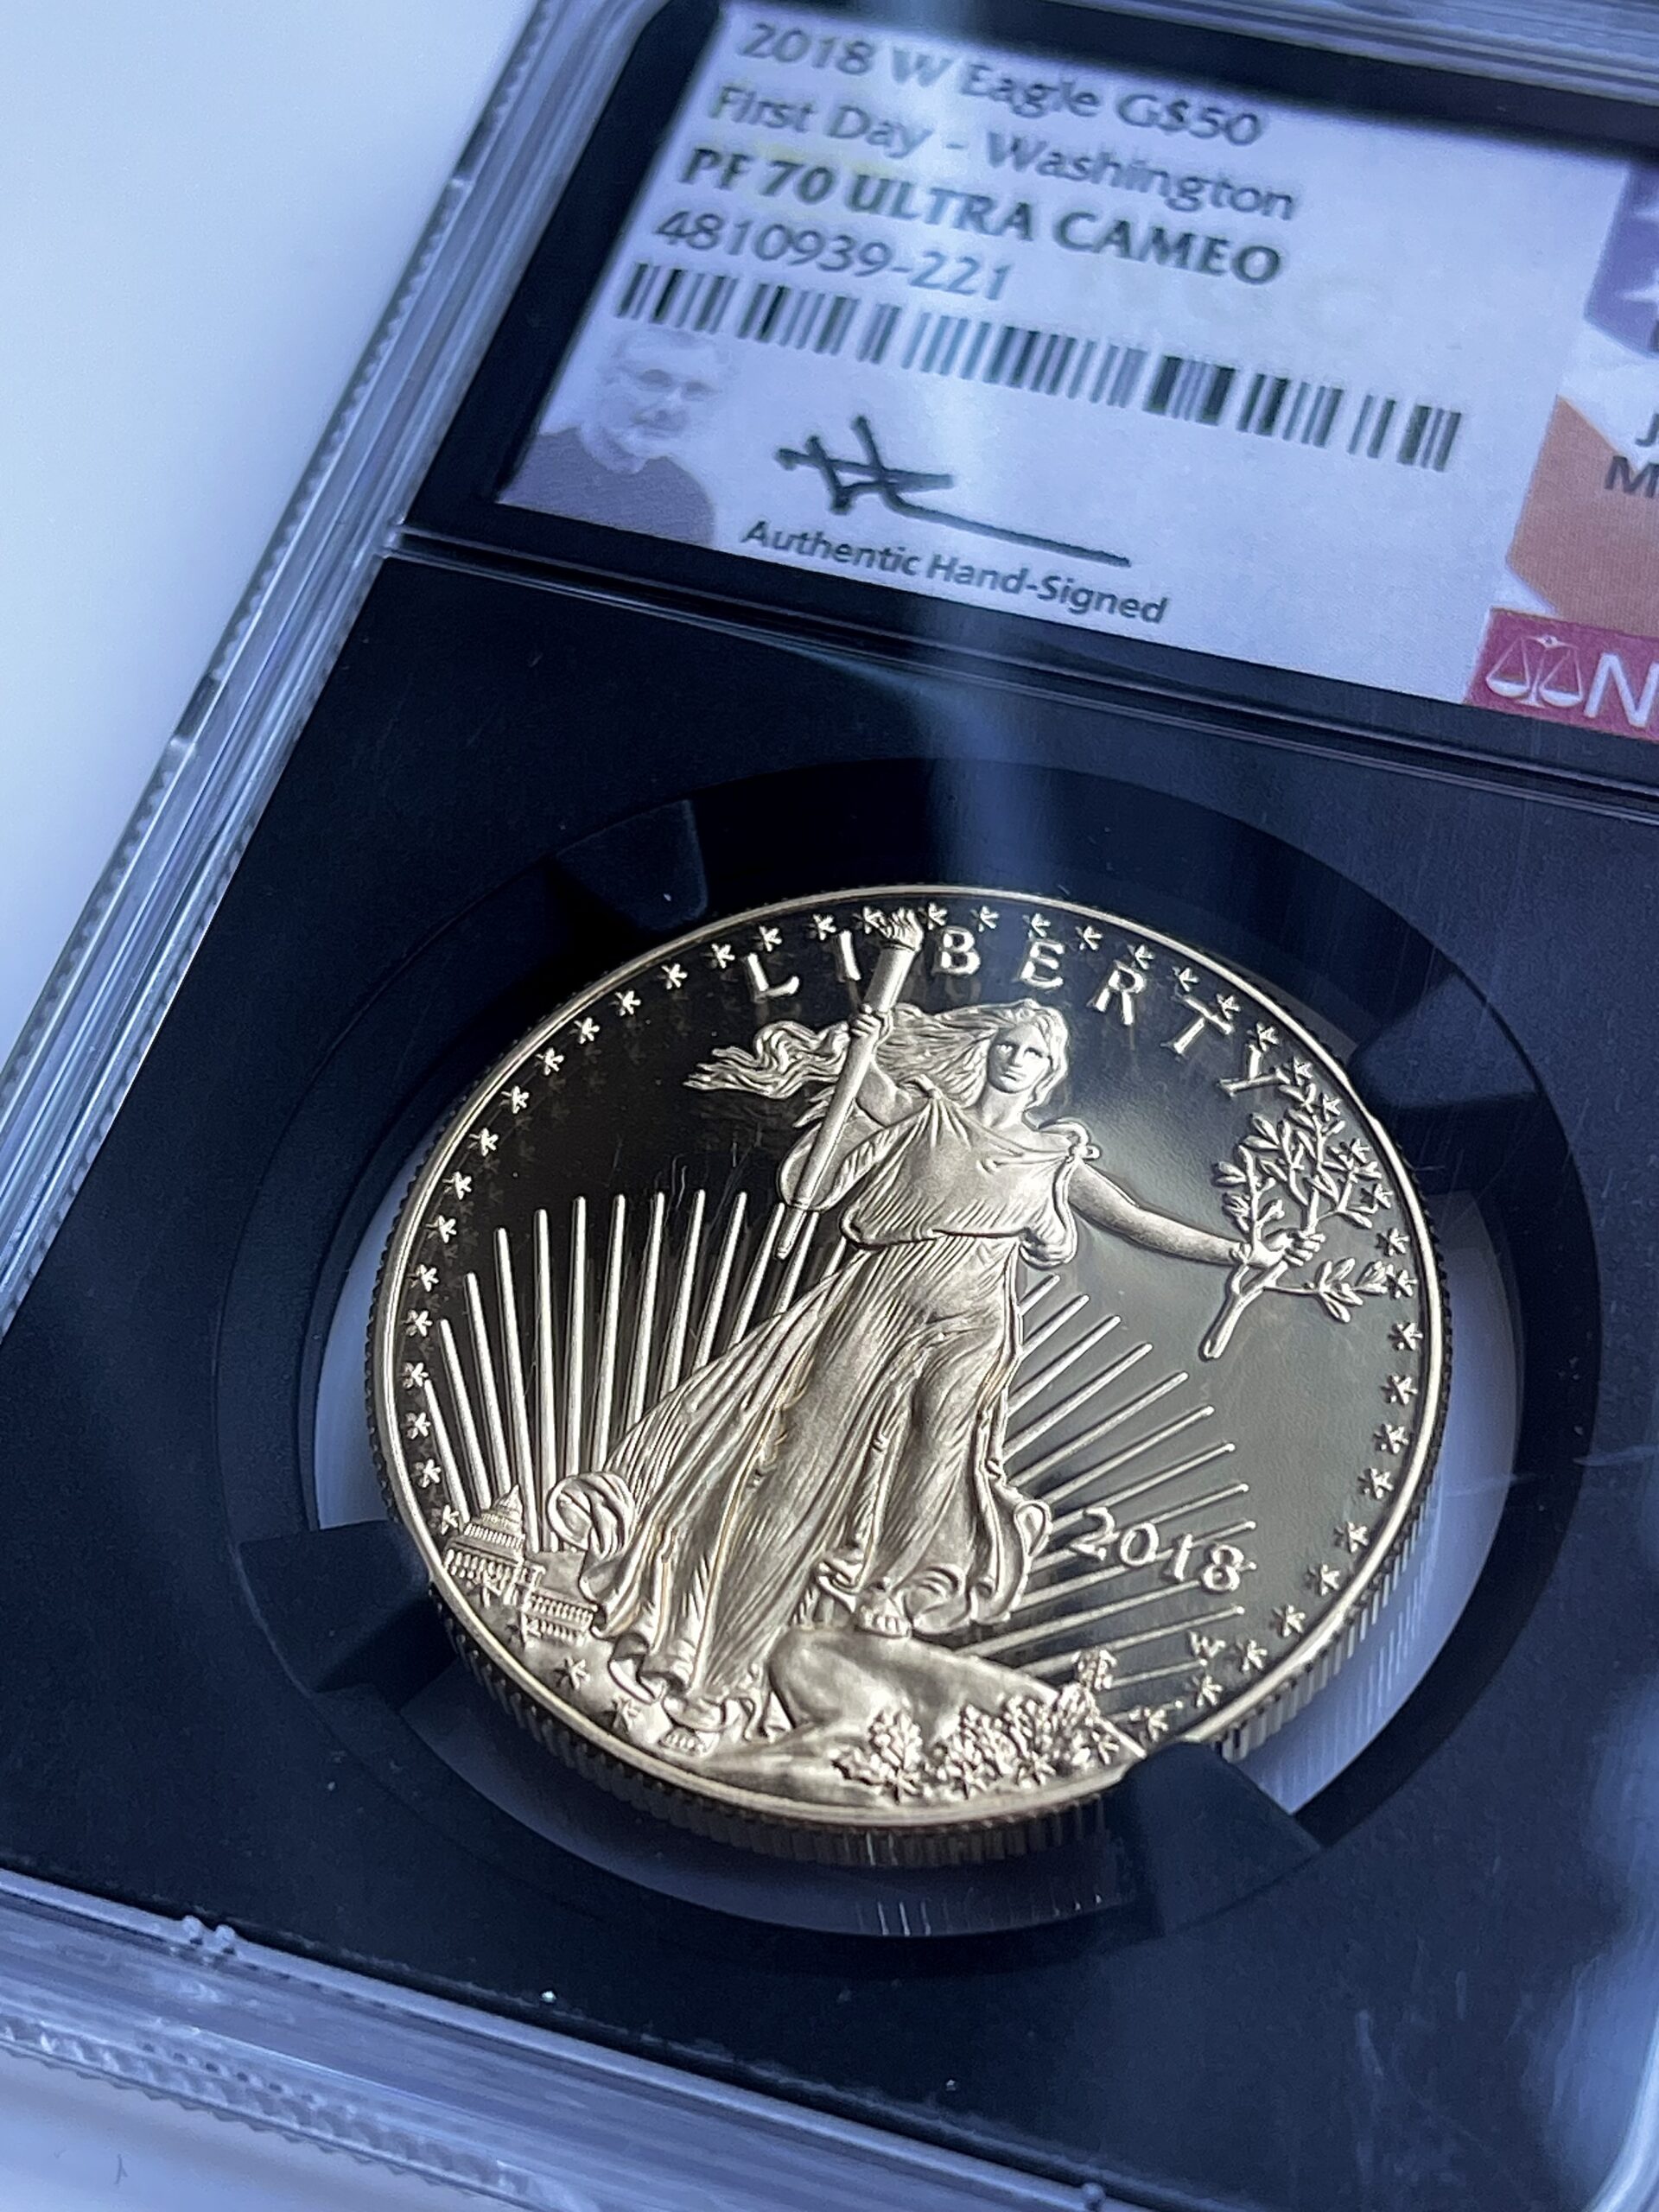 USA American Eagle 2018 50 US dollar first day Washington NGC PF70 UCAM